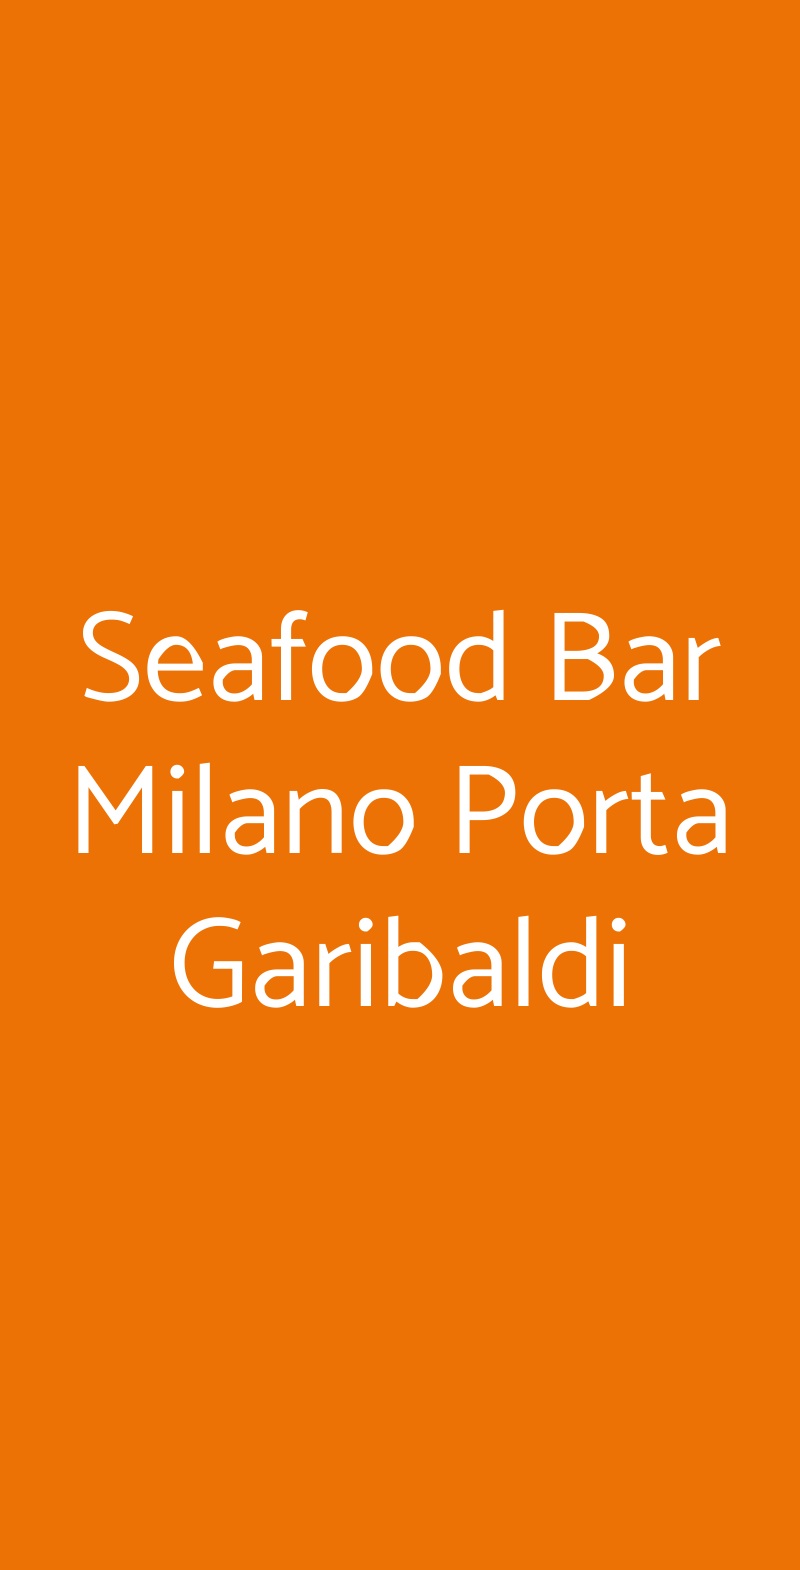 Seafood Bar Milano Porta Garibaldi Milano menù 1 pagina